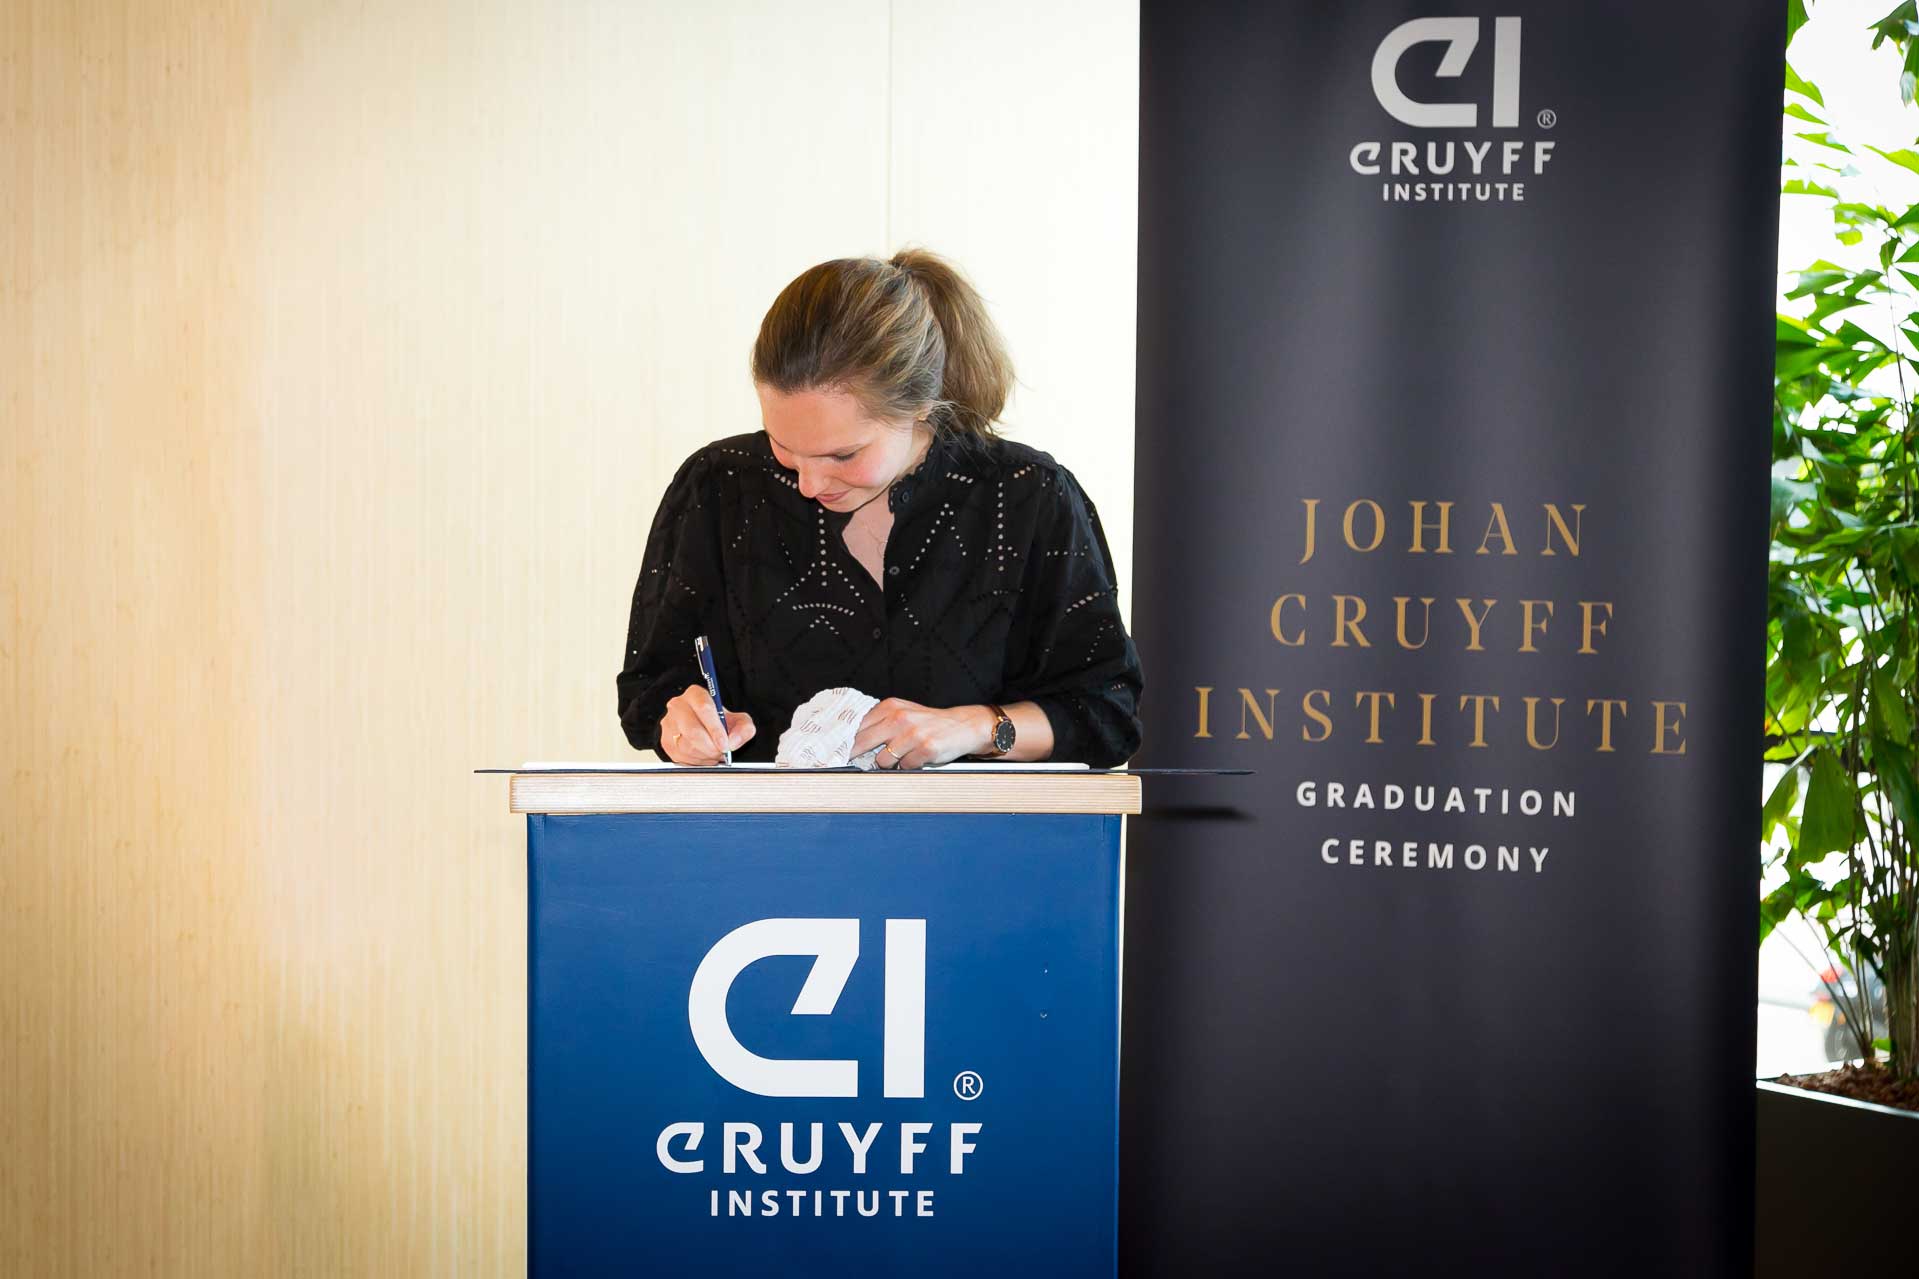 Renée Kersten - inclusief voetbal KNVB - Johan Cruyff Academy